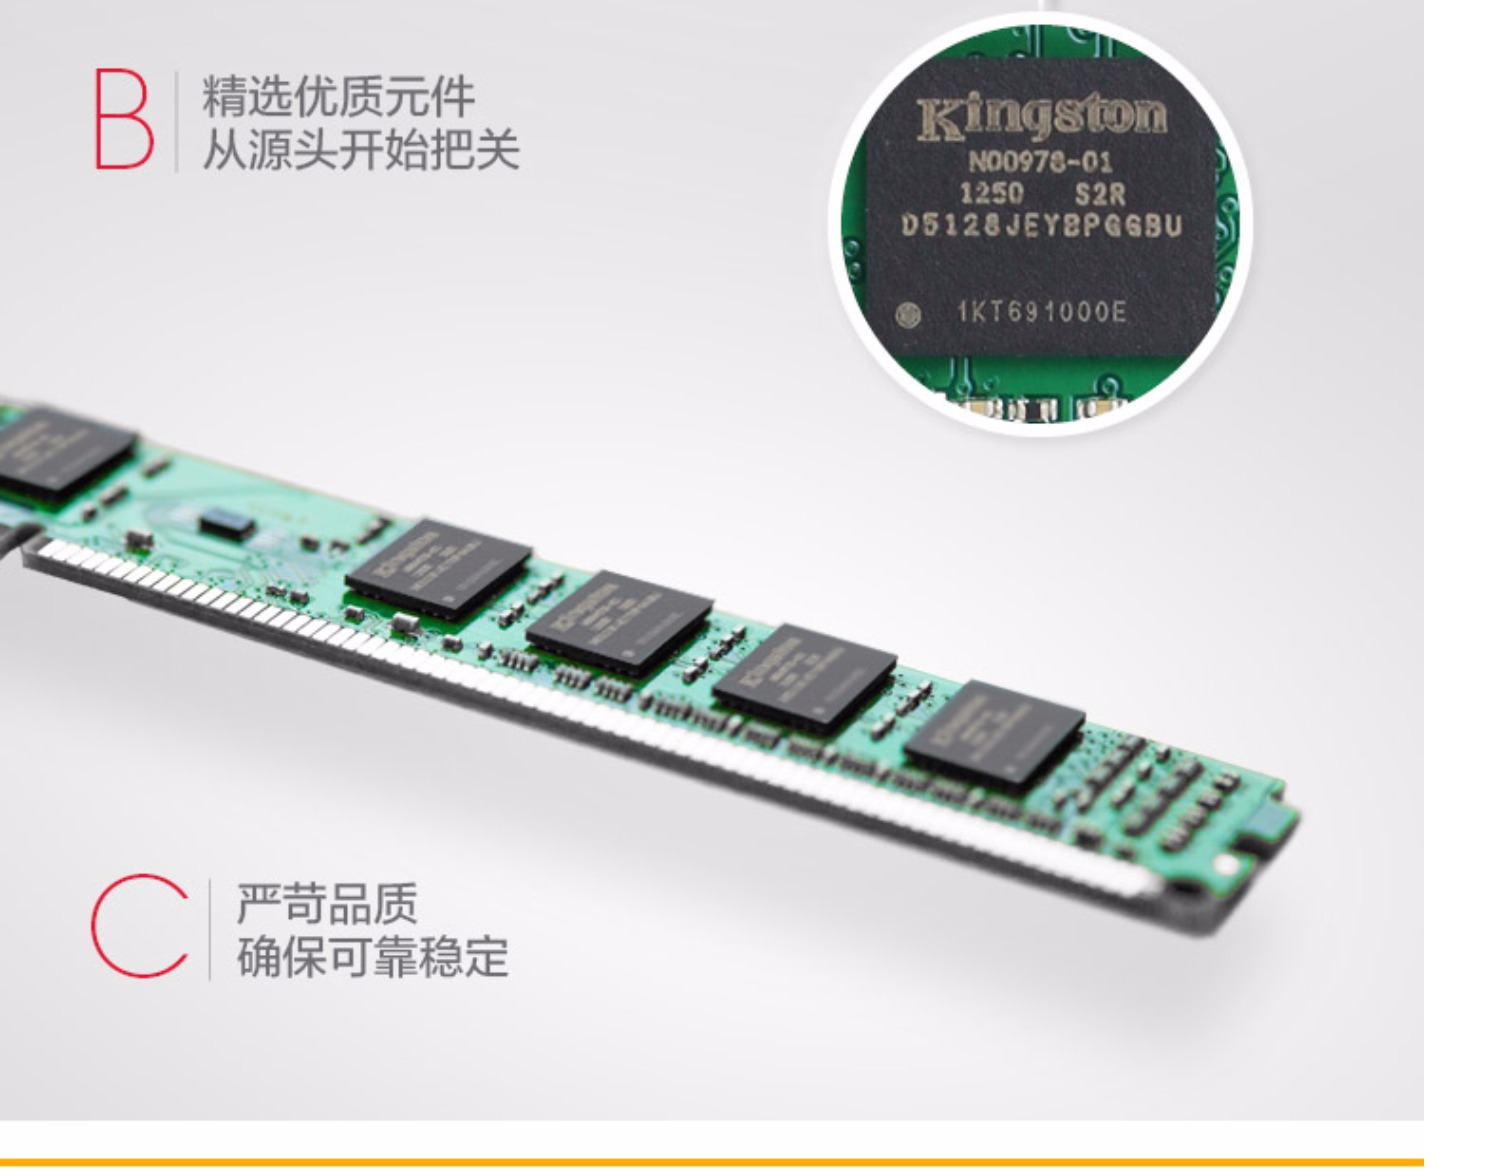 Kingston/金士顿DDR3 1600 4G台式机电脑 三代4gb内存条 兼容1333